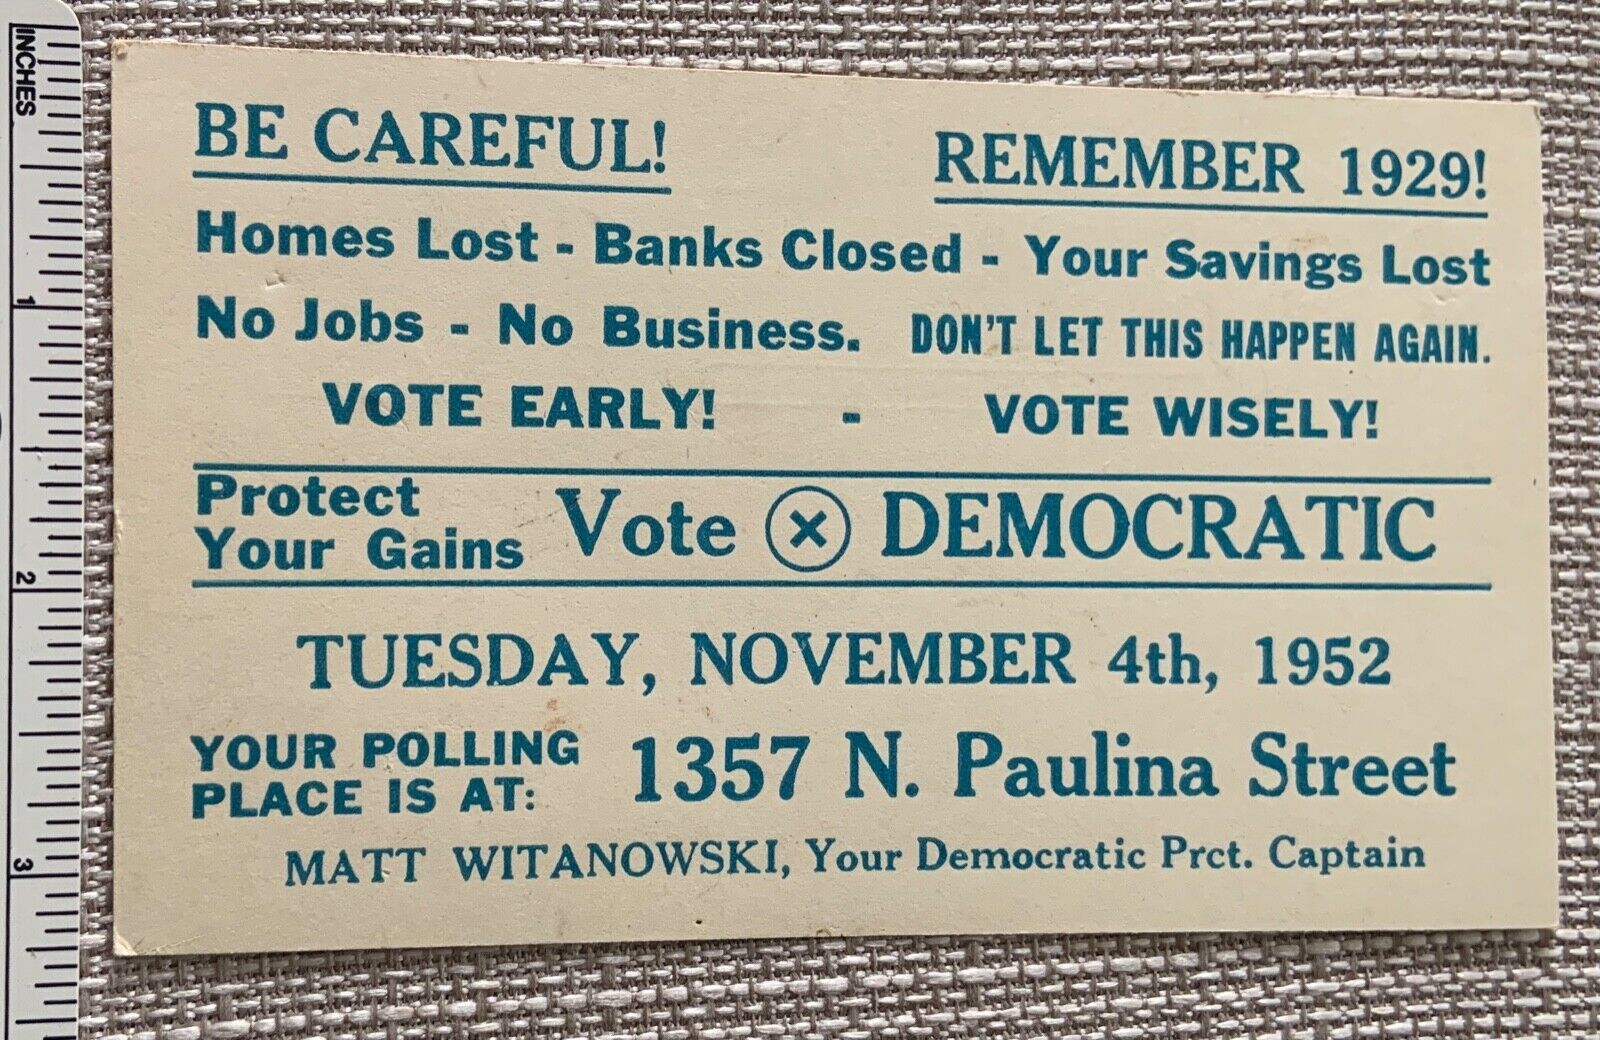 VTG Nov. 4th 1952 VOTE DEMOCRATIC Promotional POSTCARD Remember 1929 Campaign